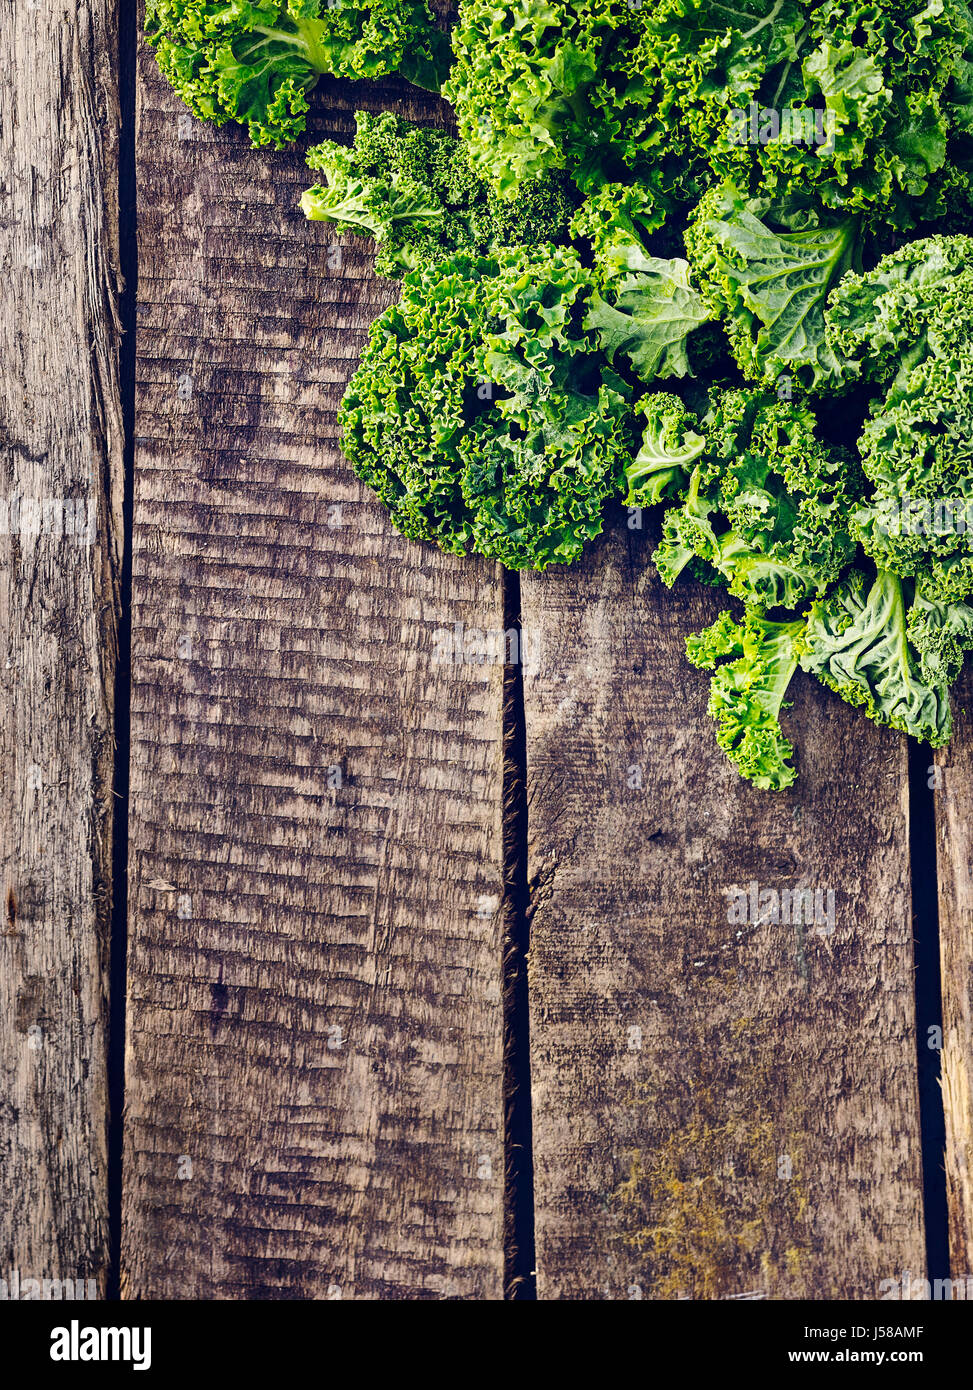 Kale on wooden surface Stock Photo